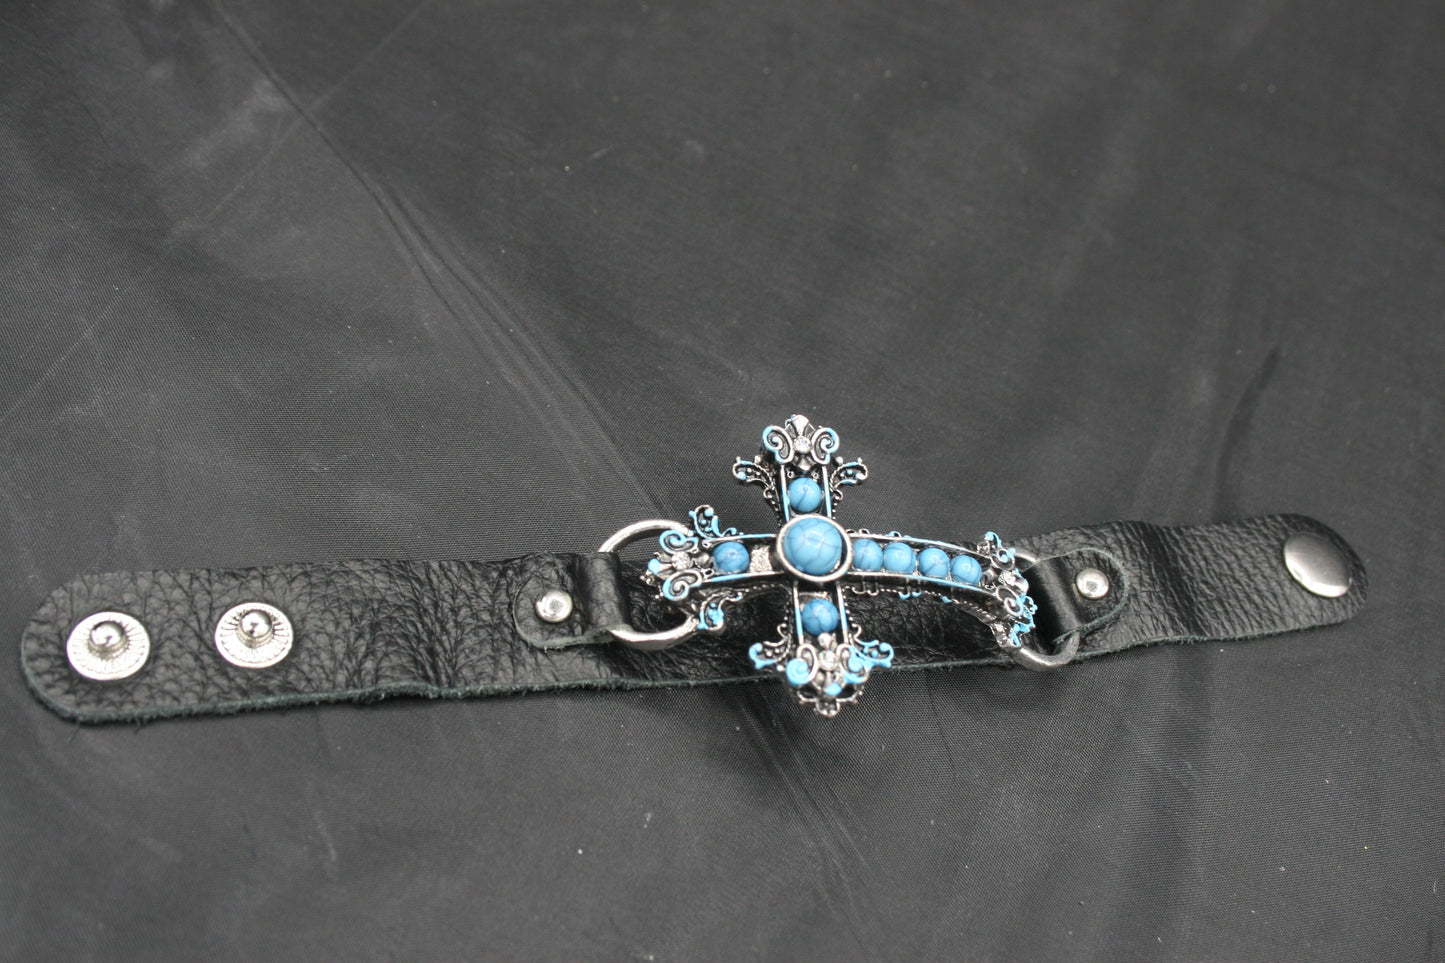 Leather Cross Bracelet